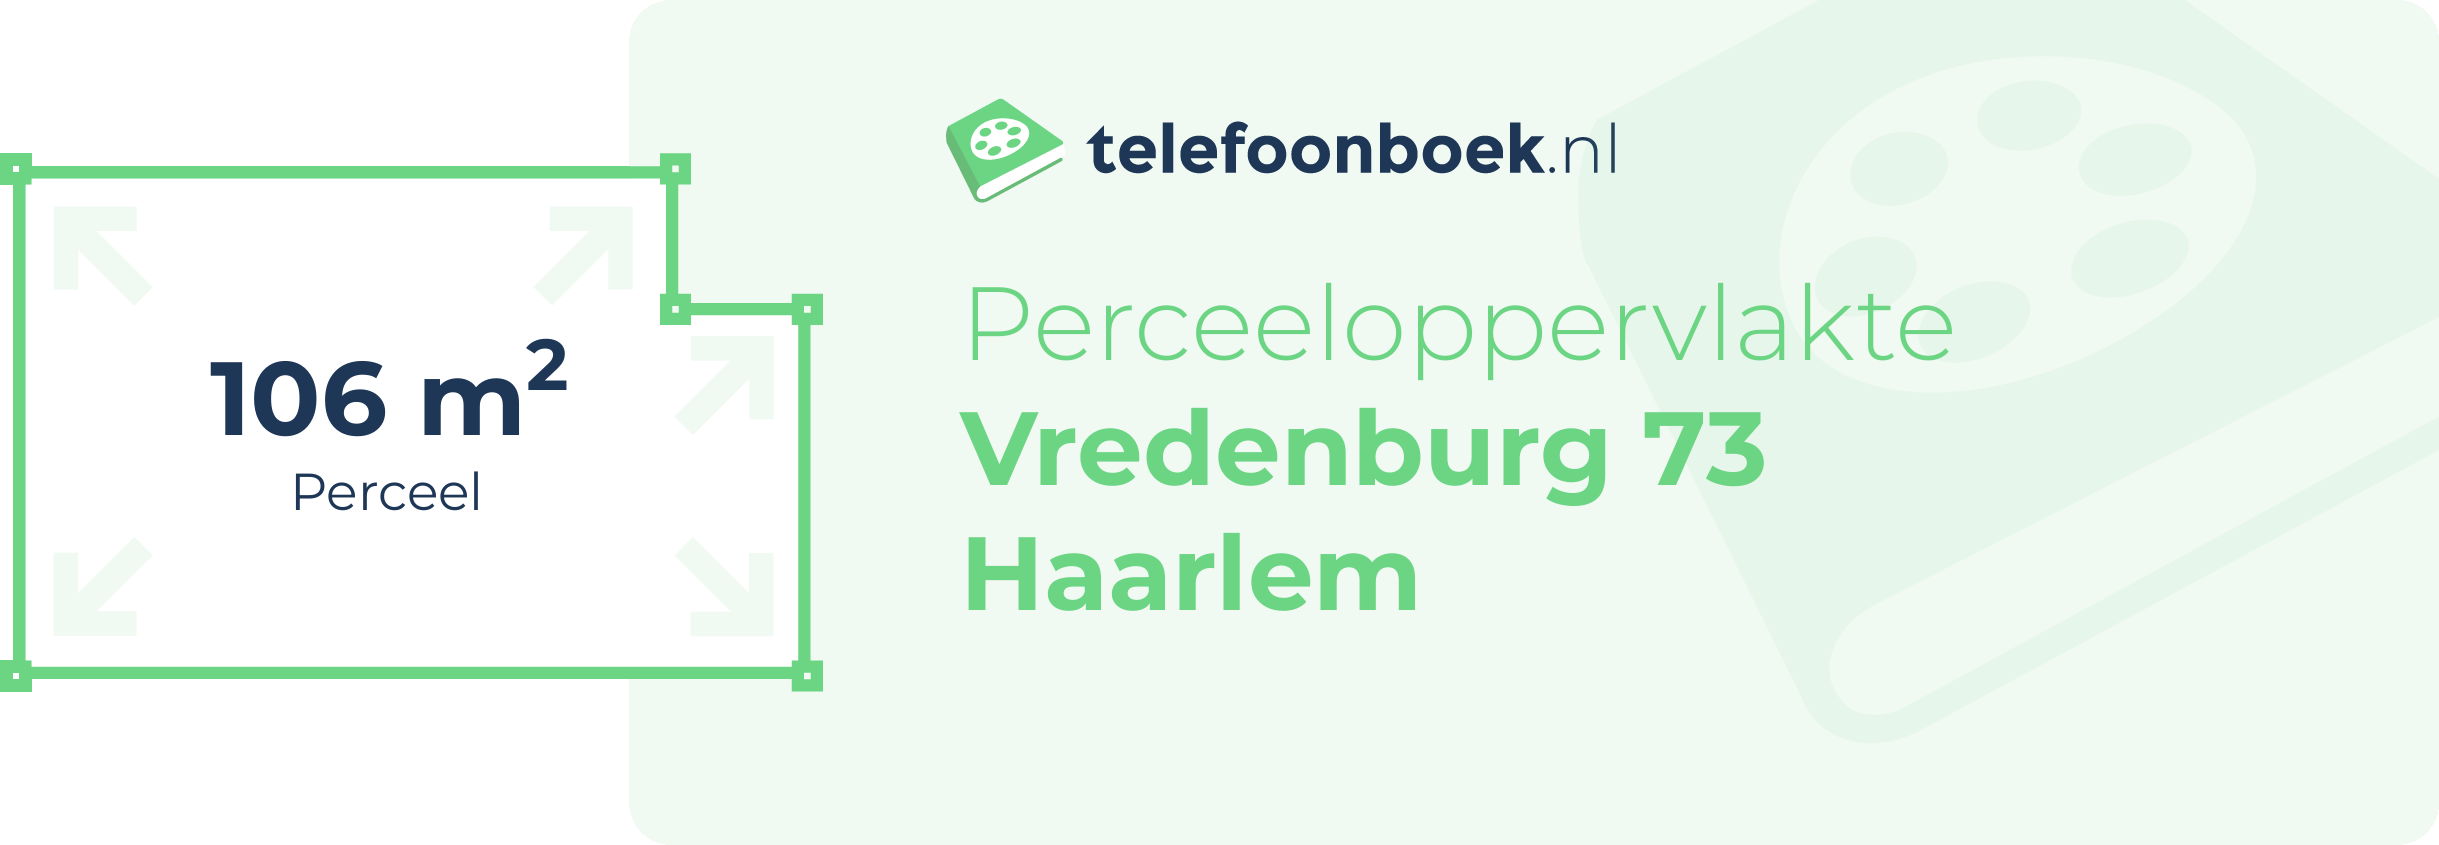 Perceeloppervlakte Vredenburg 73 Haarlem